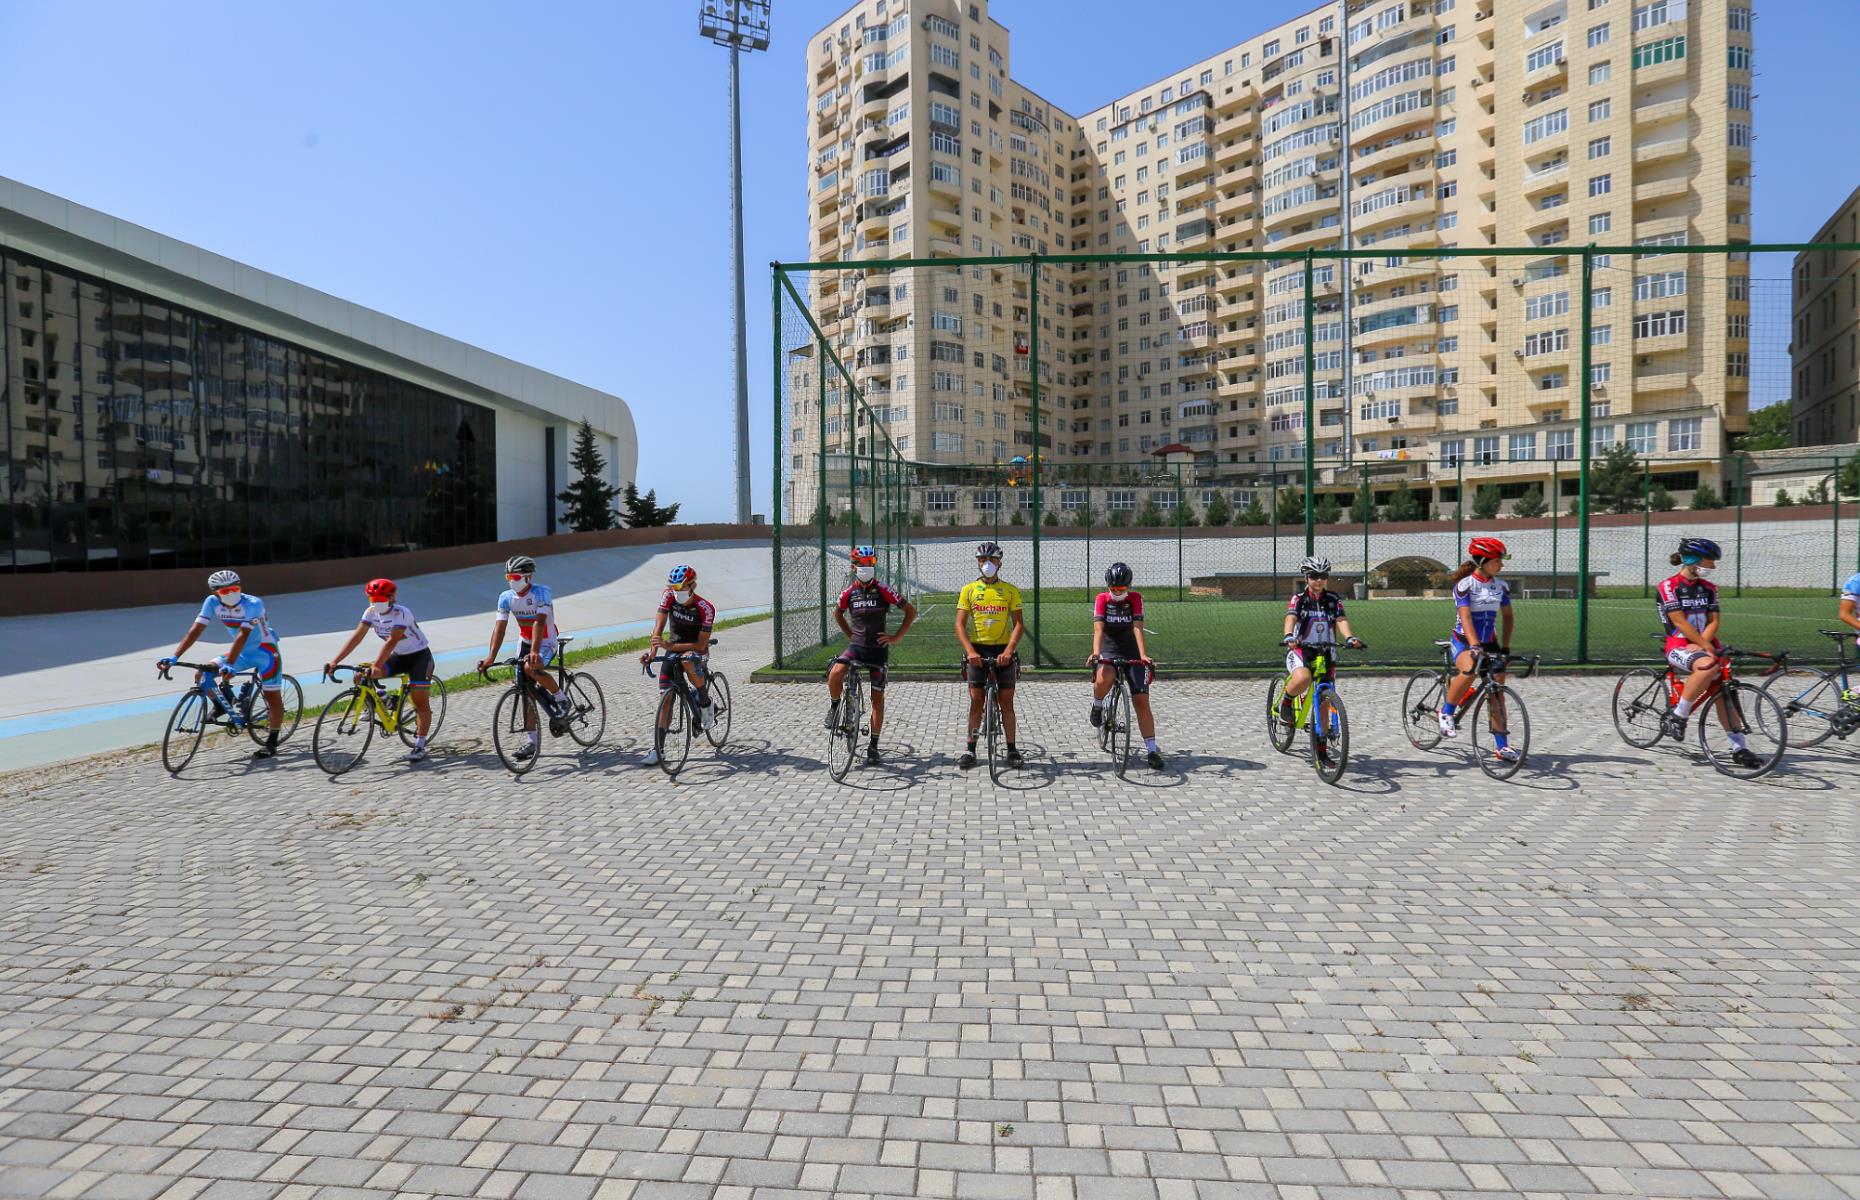 Baku, Azerbaijan: Cyclists gear up to resume training